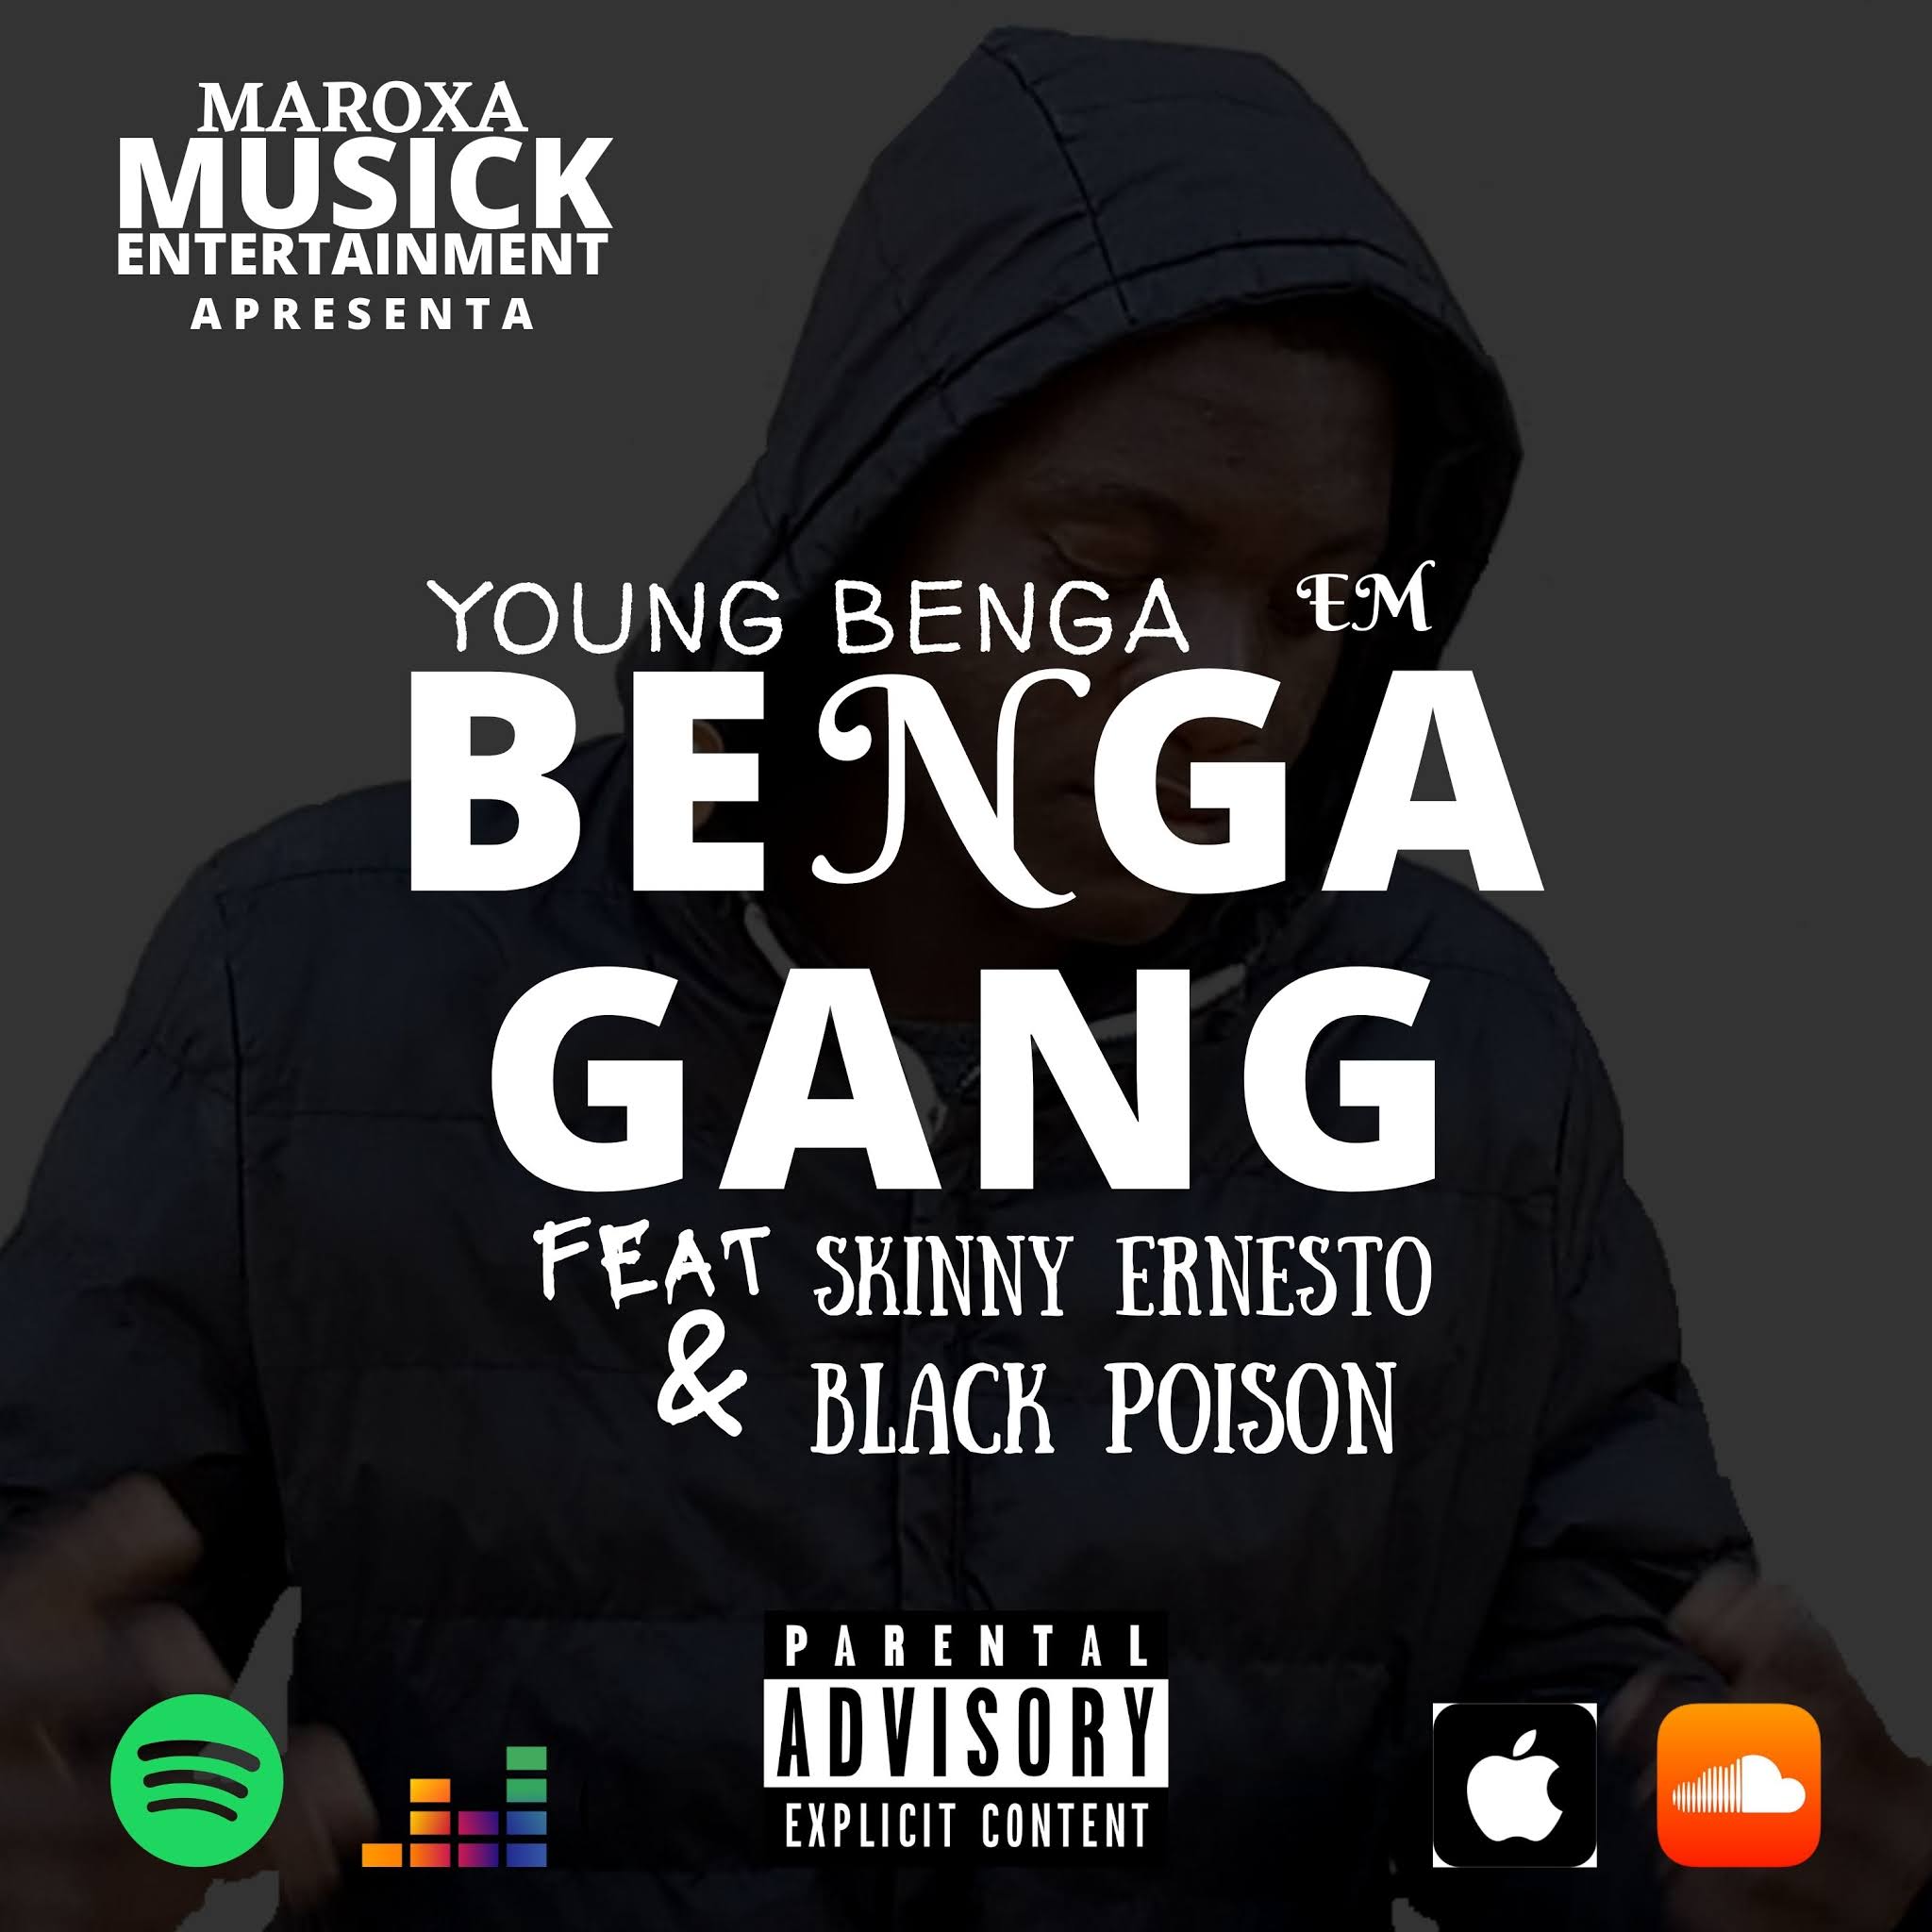 Young Benga - Benga Gang (Feat. Skinny Ernesto & Black Poison) 2020 [DOWNLOAD || BAIXAR MP3